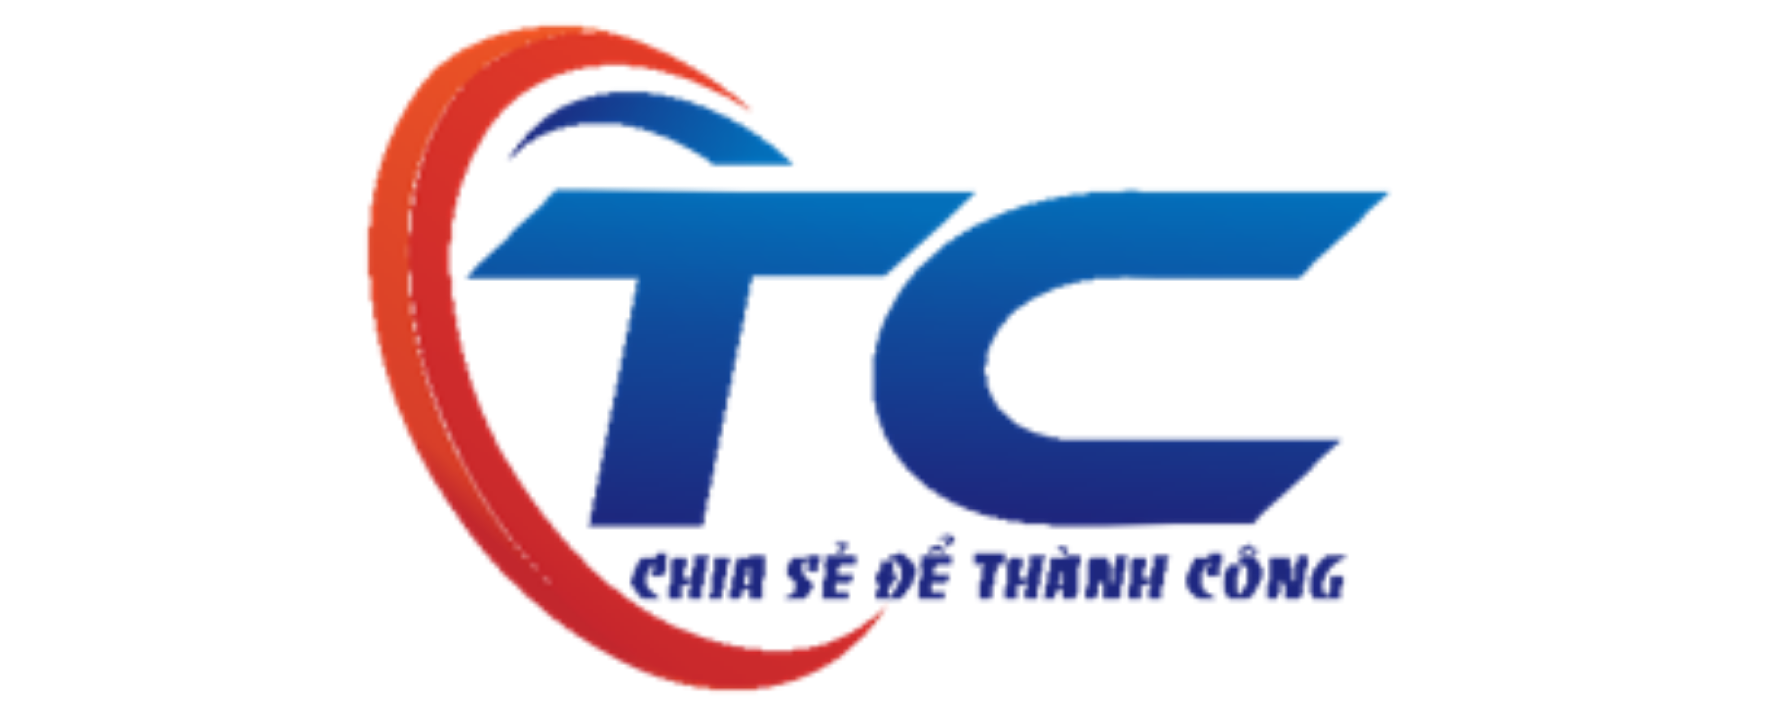 TC ENGINEERING., JSC logo